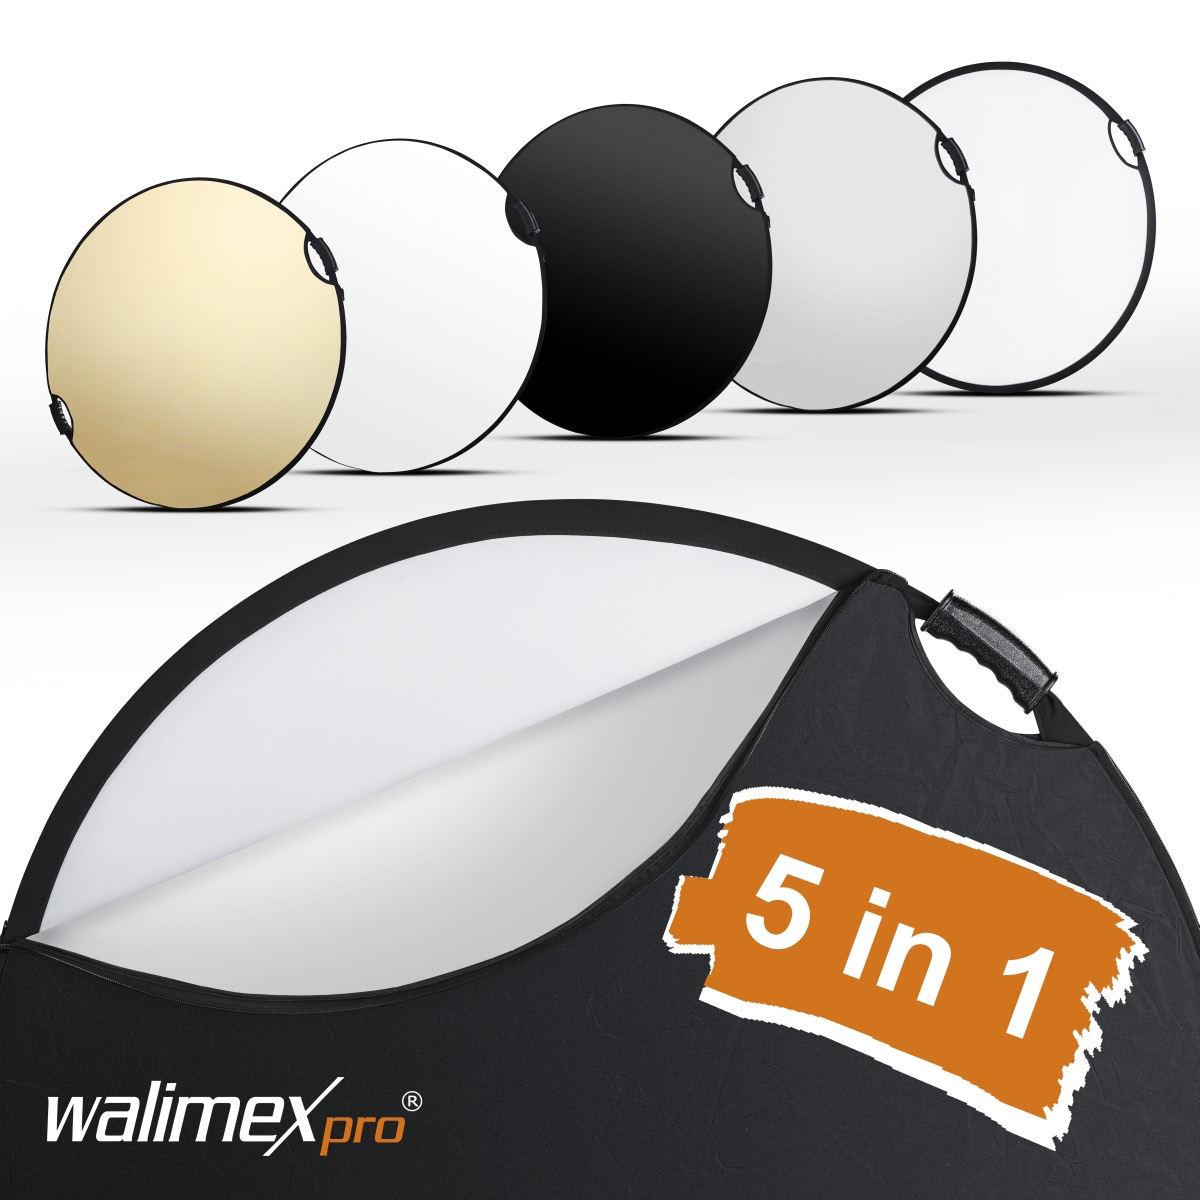 Walimex pro 5in1 Faltreflektor wavy comfort Ø56cm